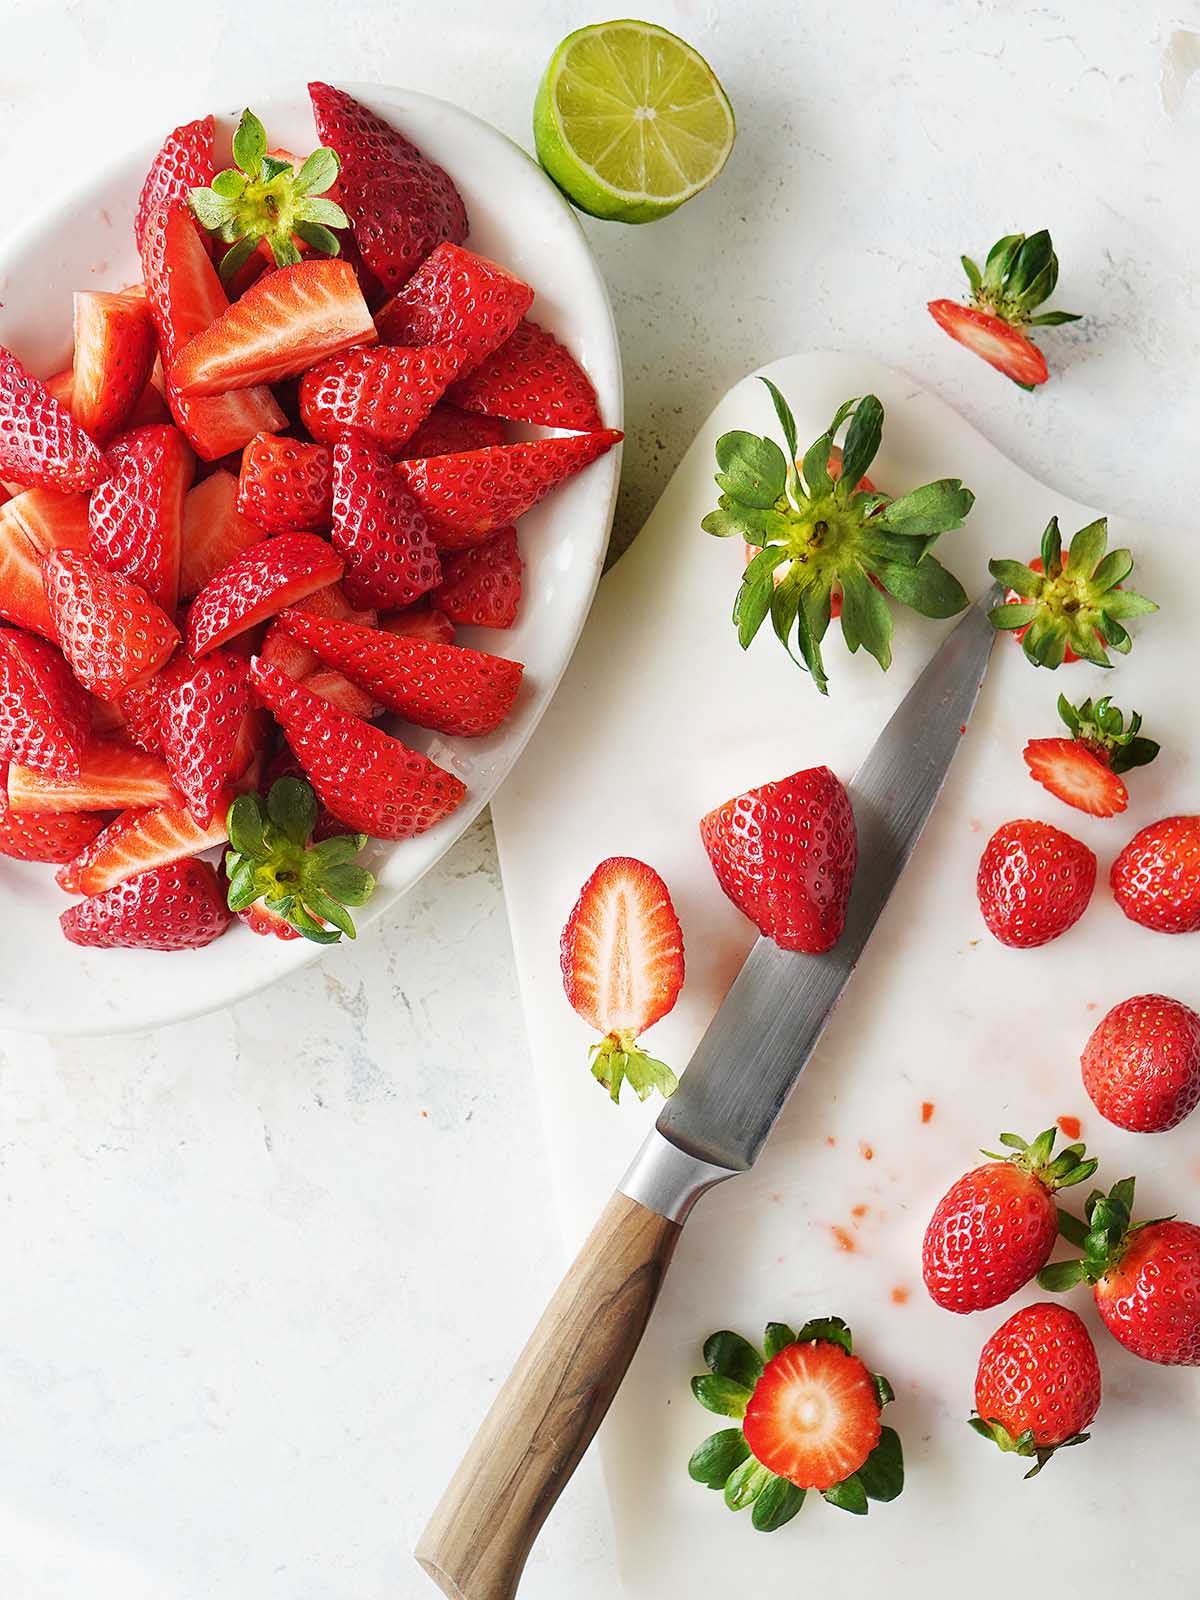 Cutting strawberries on a white cutting board.